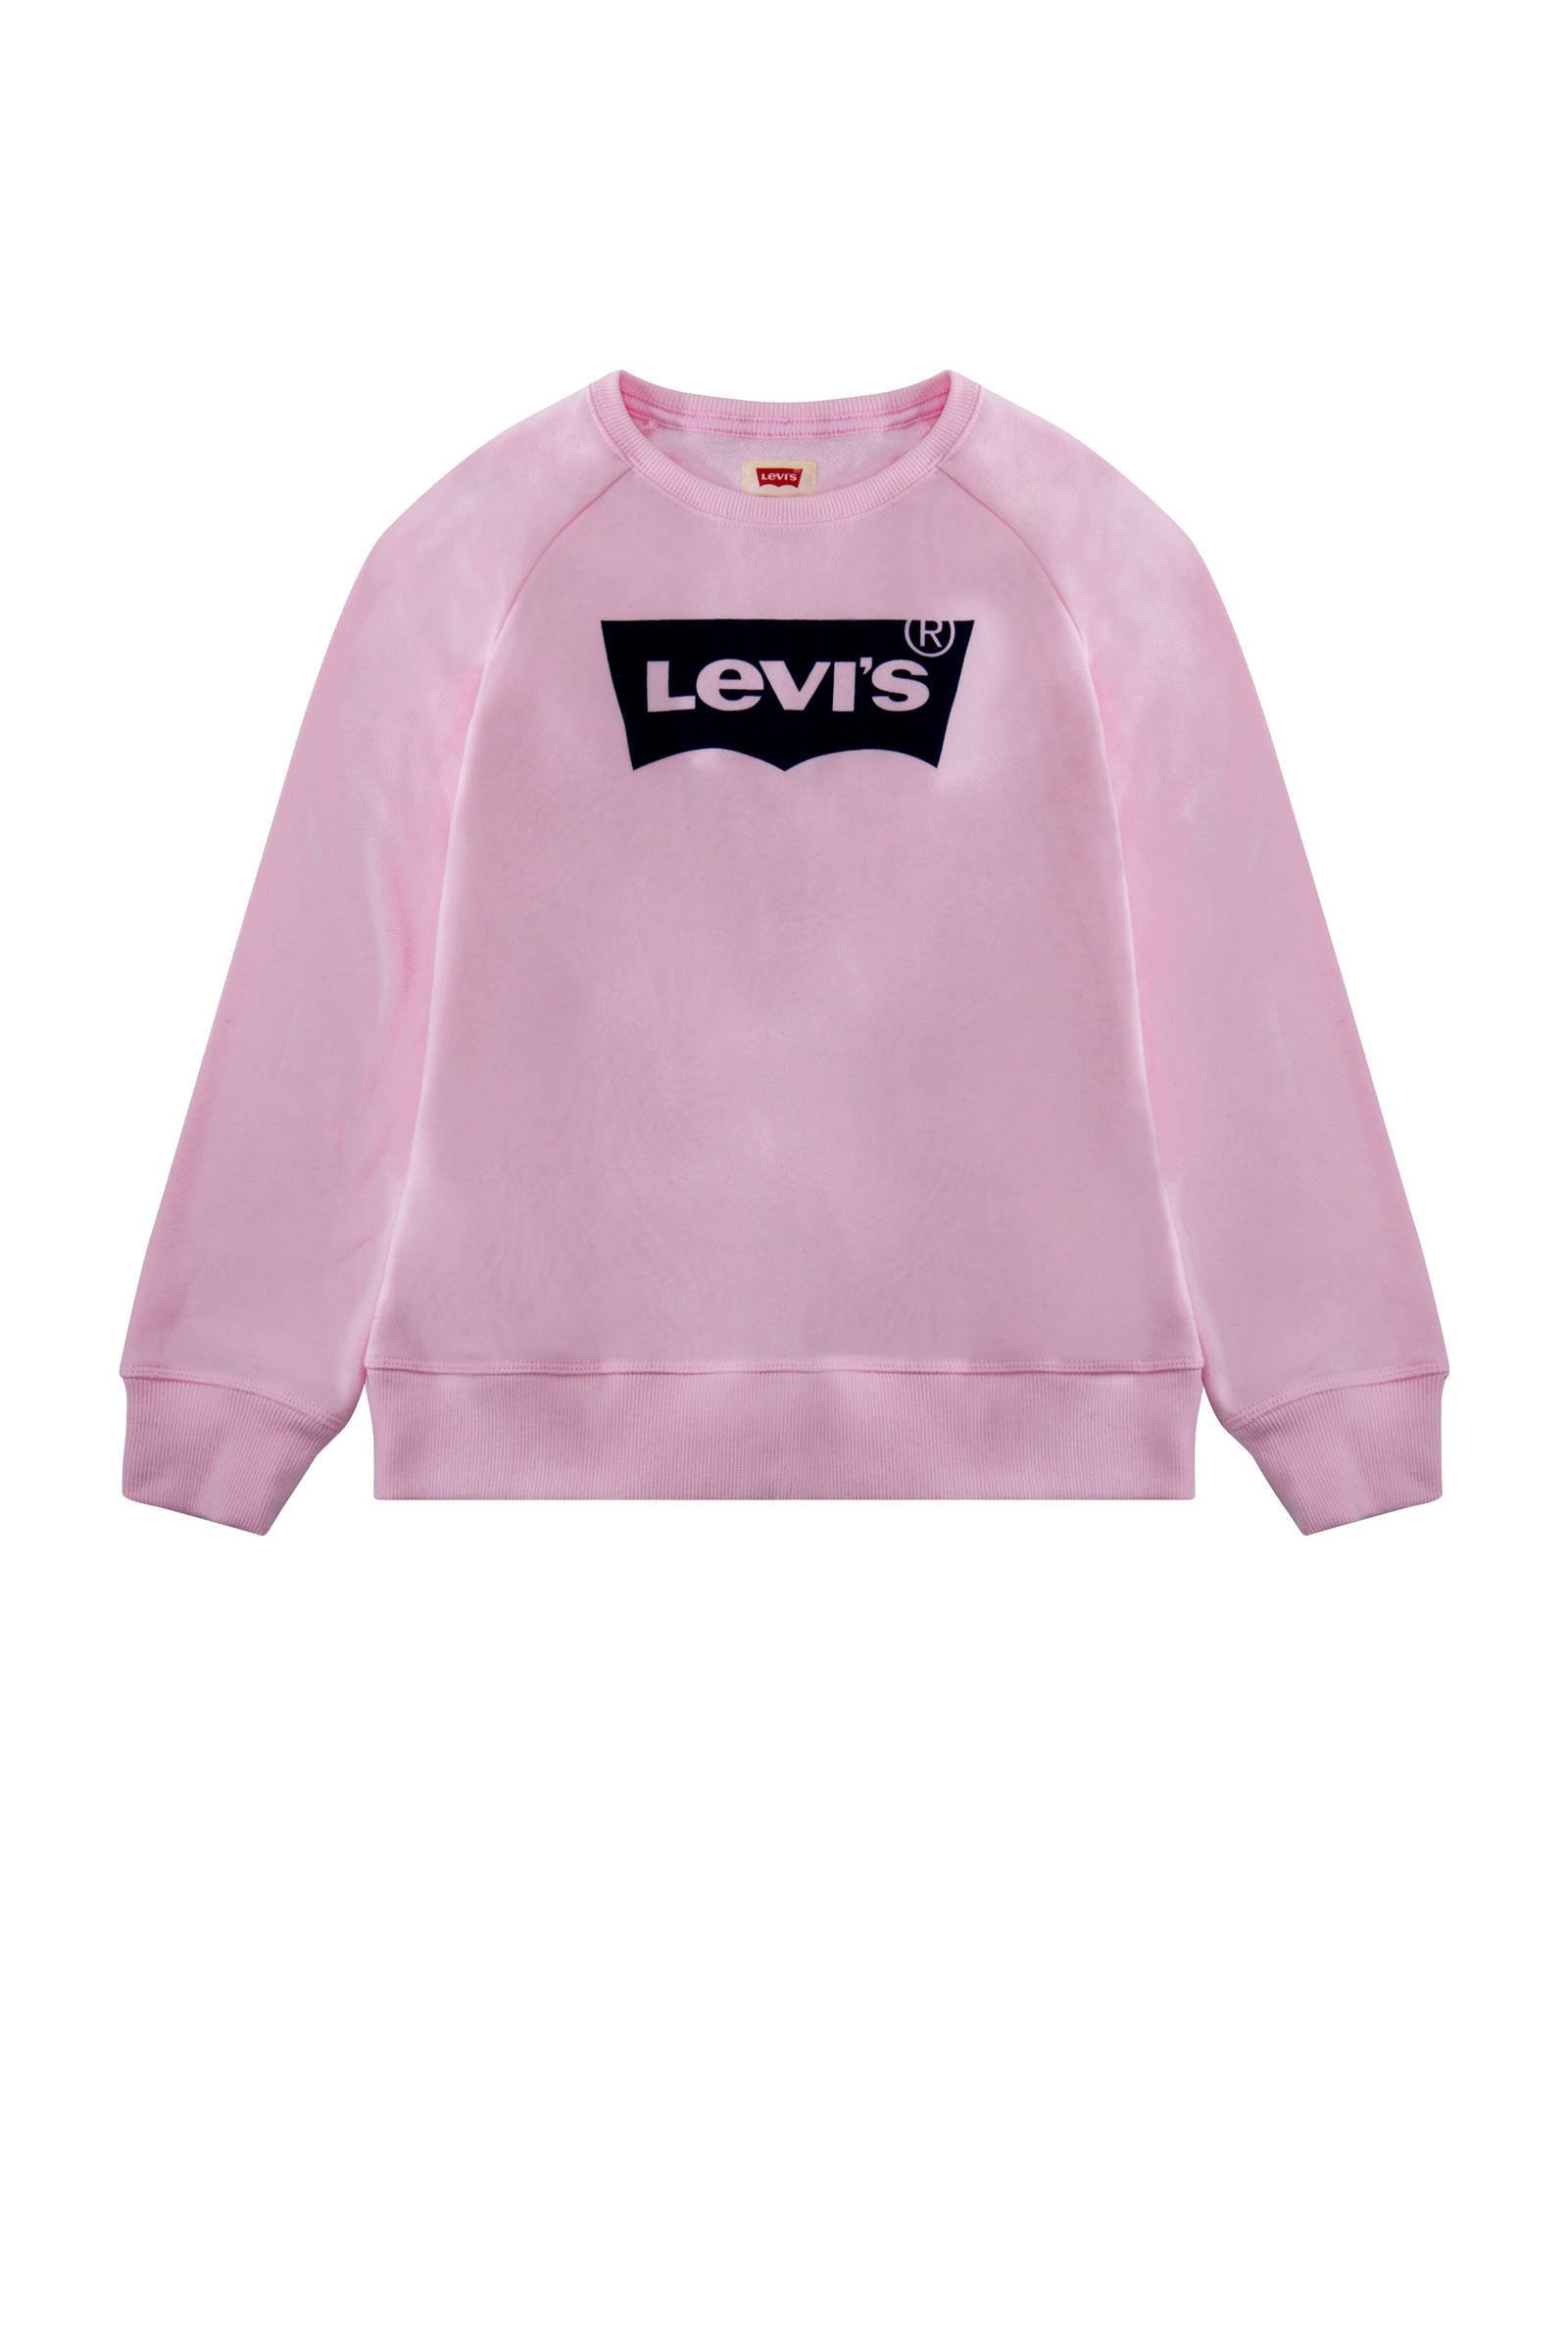 levis kids sweater